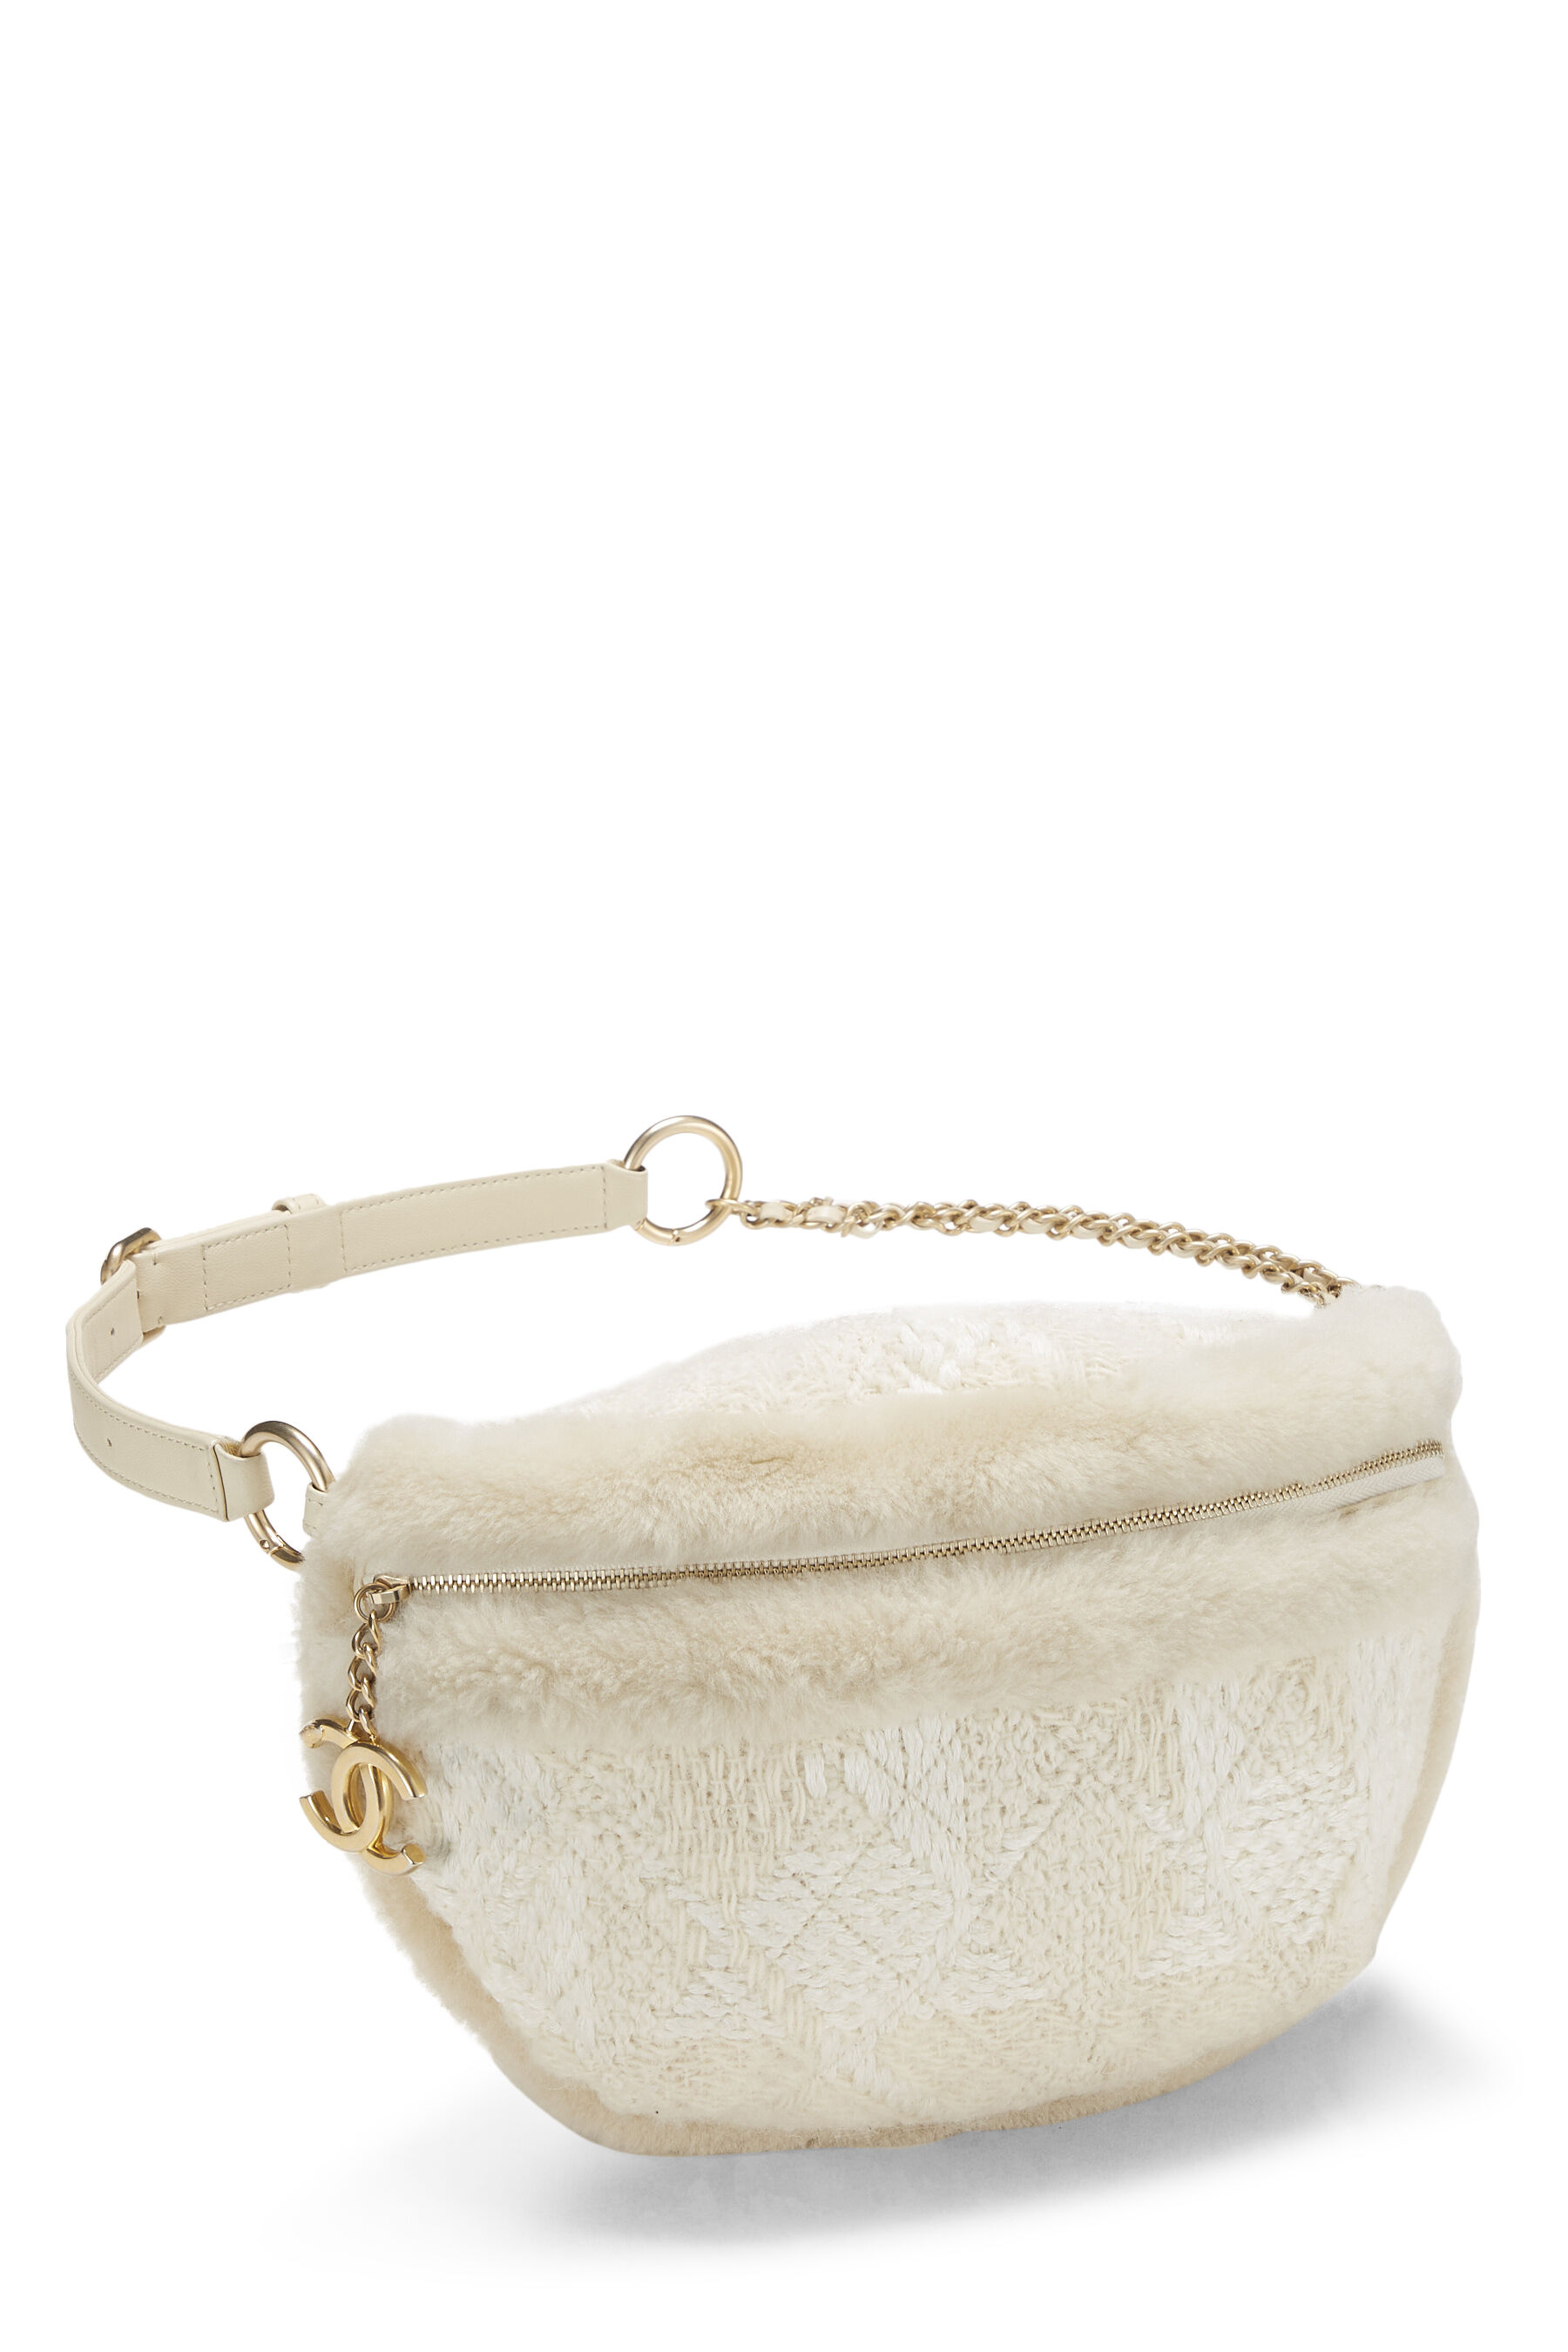 Chanel Ivory Tweed & Shearling Belt Bag Q6B0014FWB001